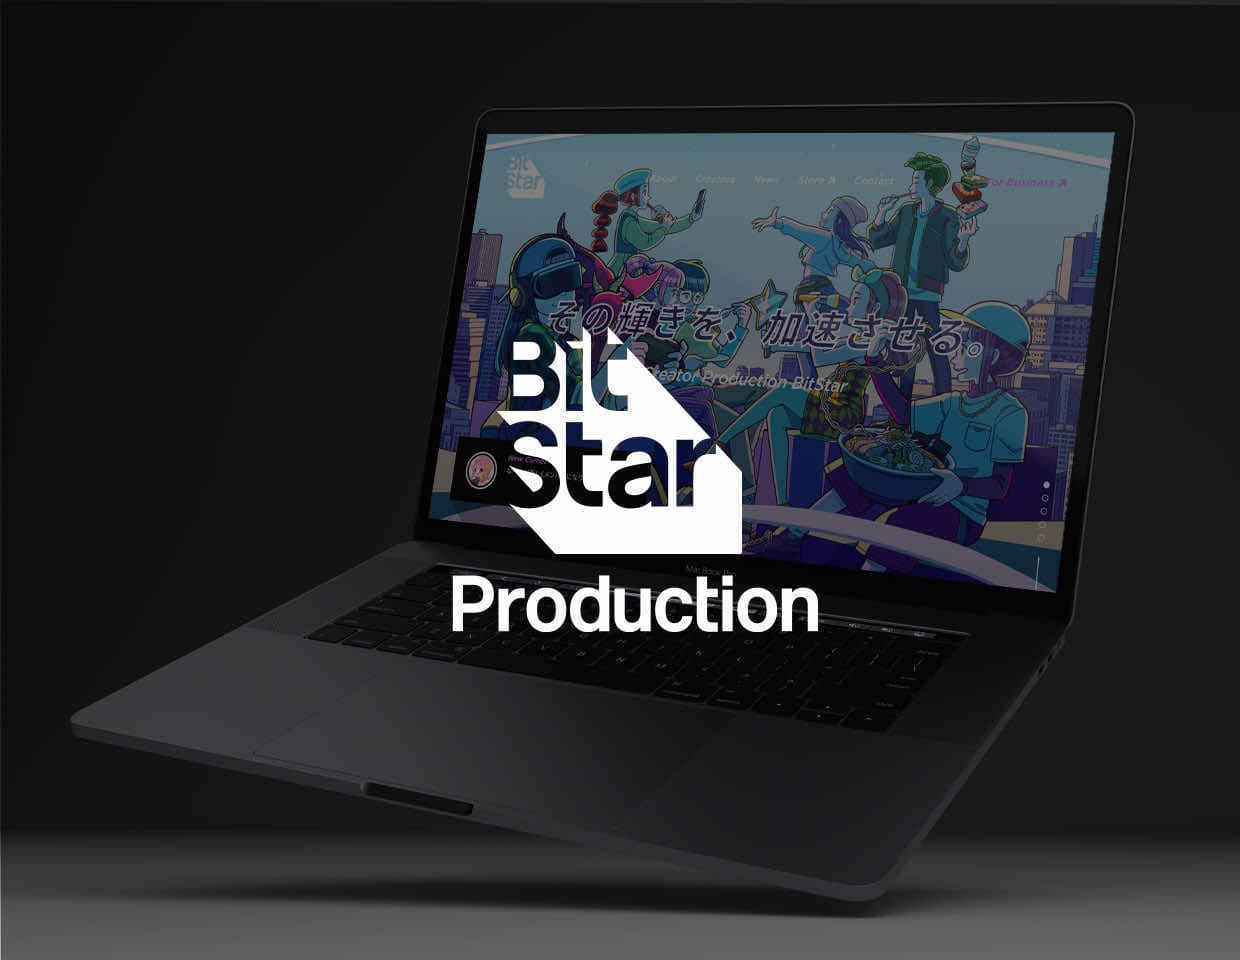 BitStar Production